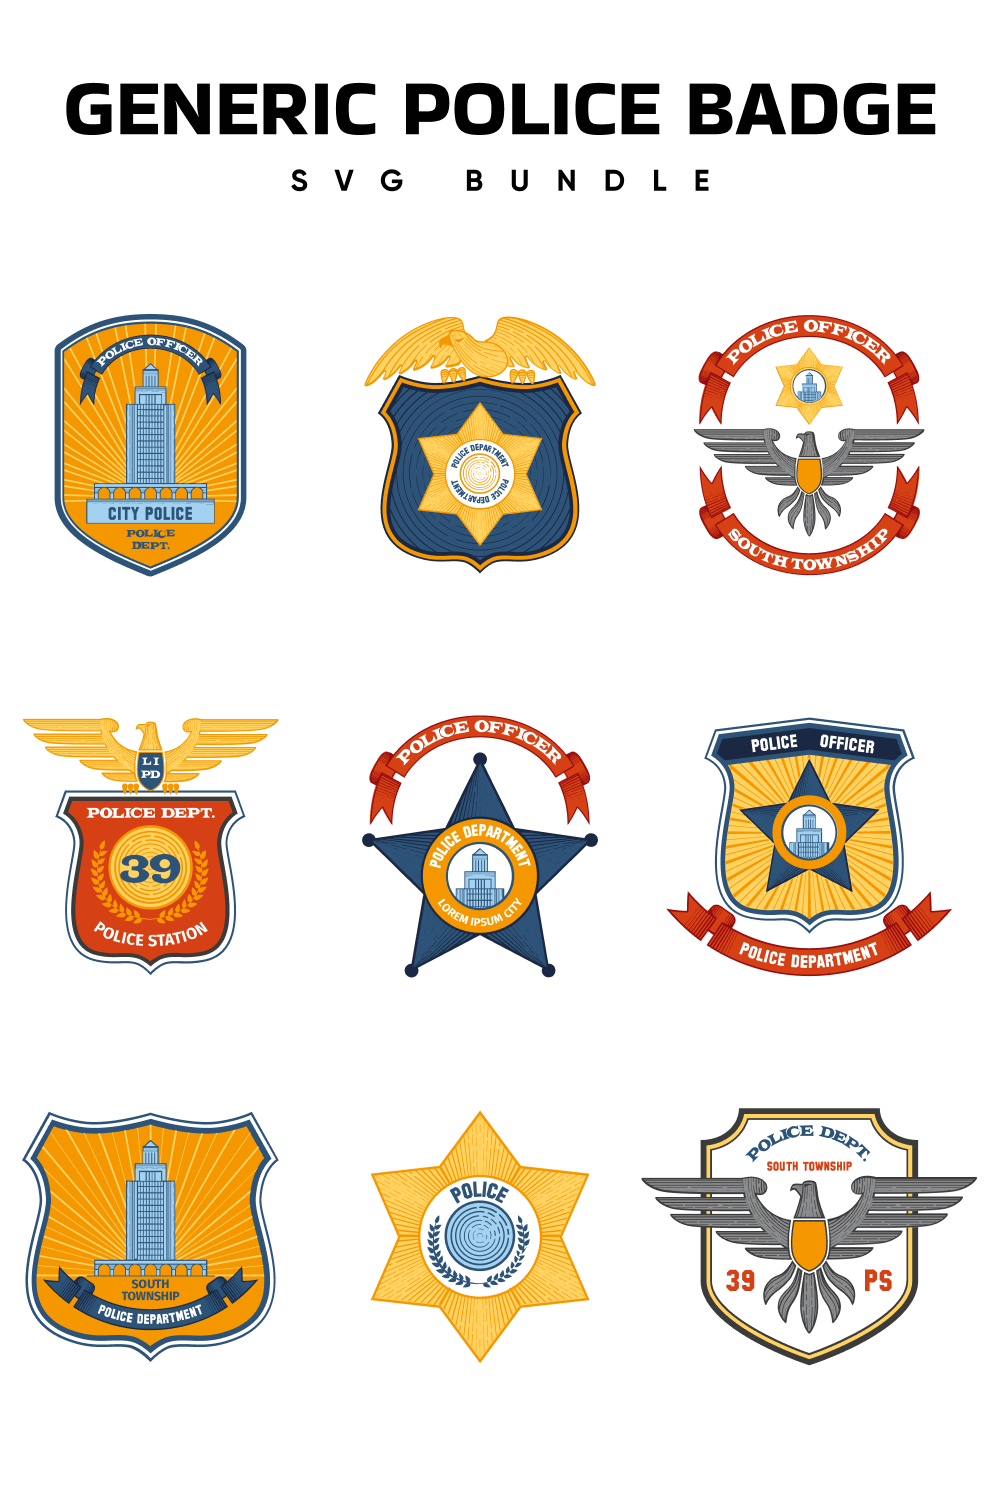 Generic Police Badge Svg - Pinterest.